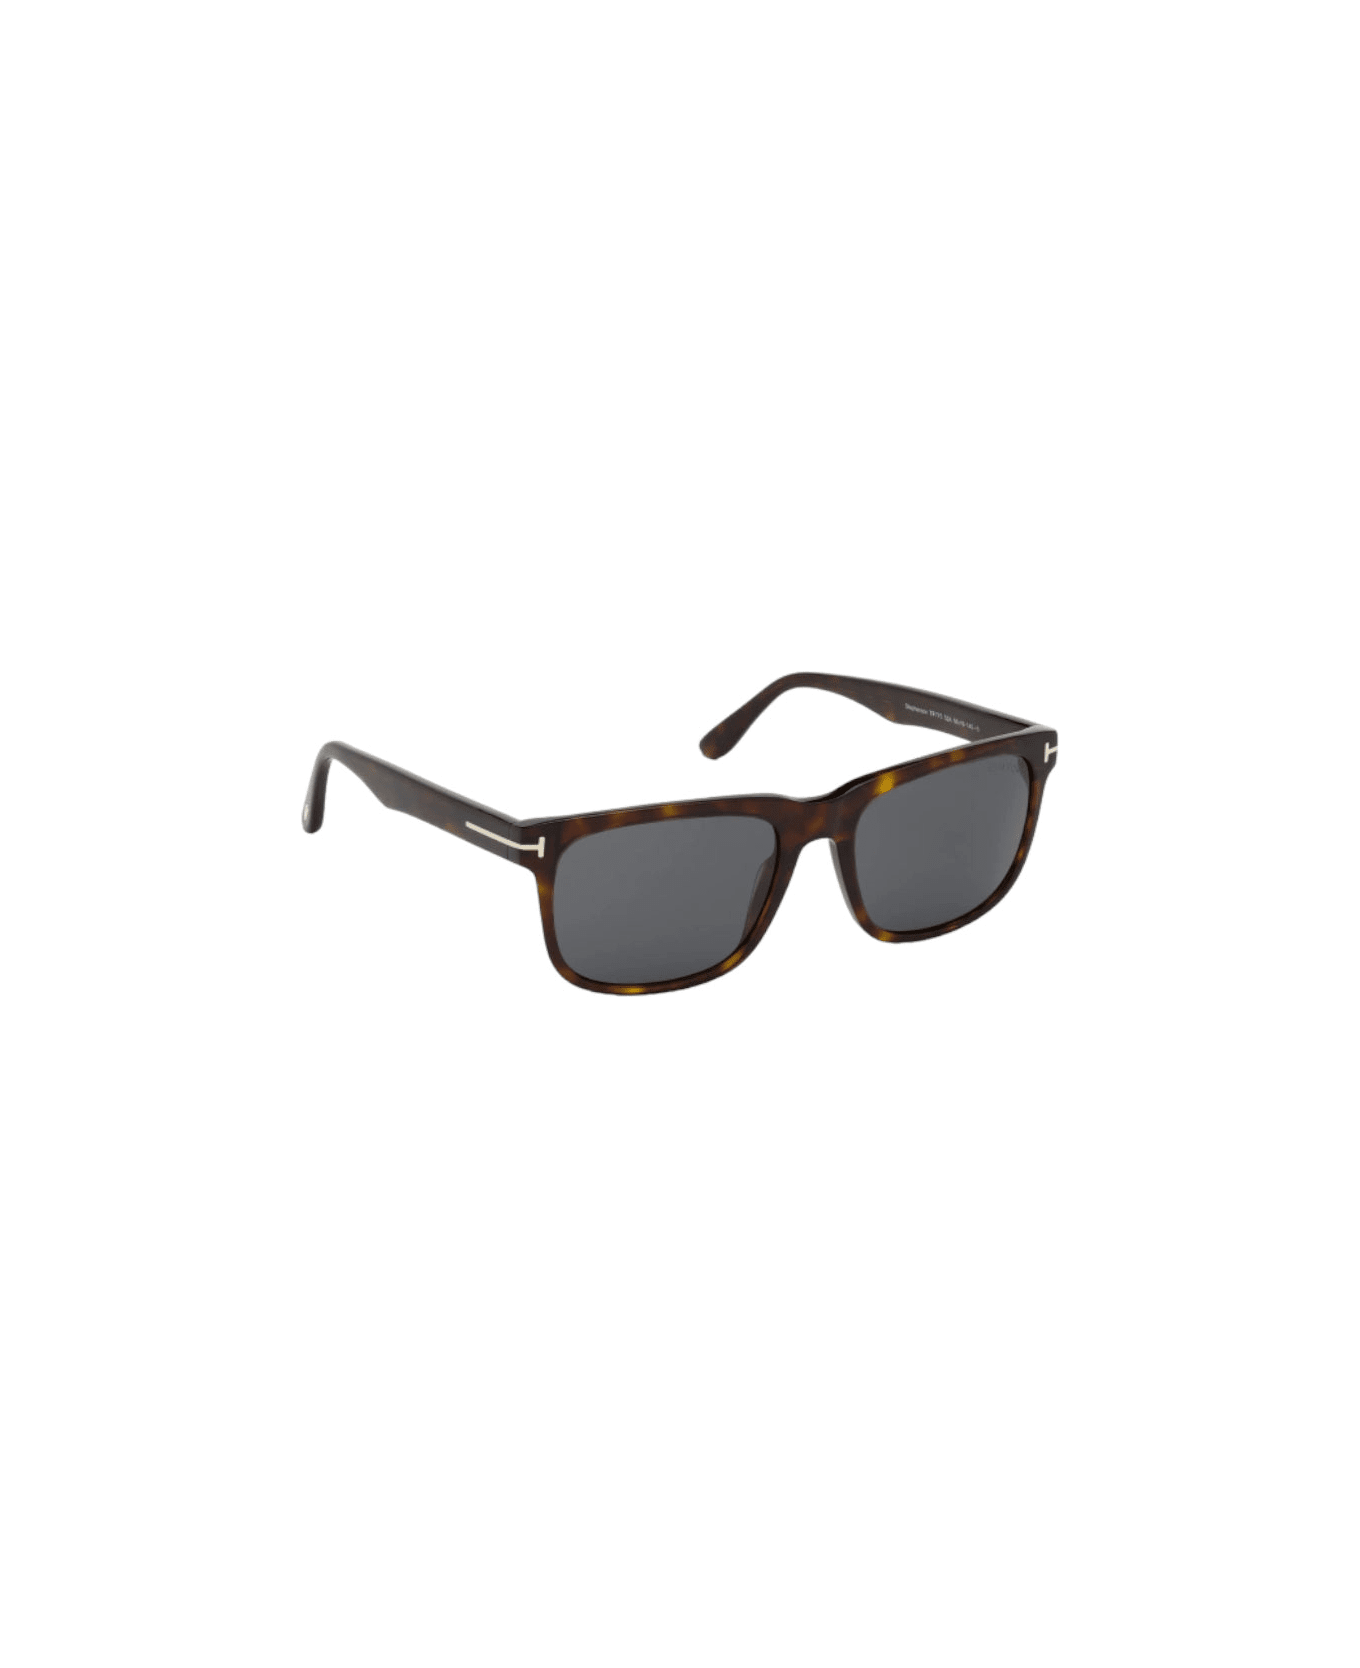 Tom Ford Eyewear Stephenson - Ft 775 Sunglasses